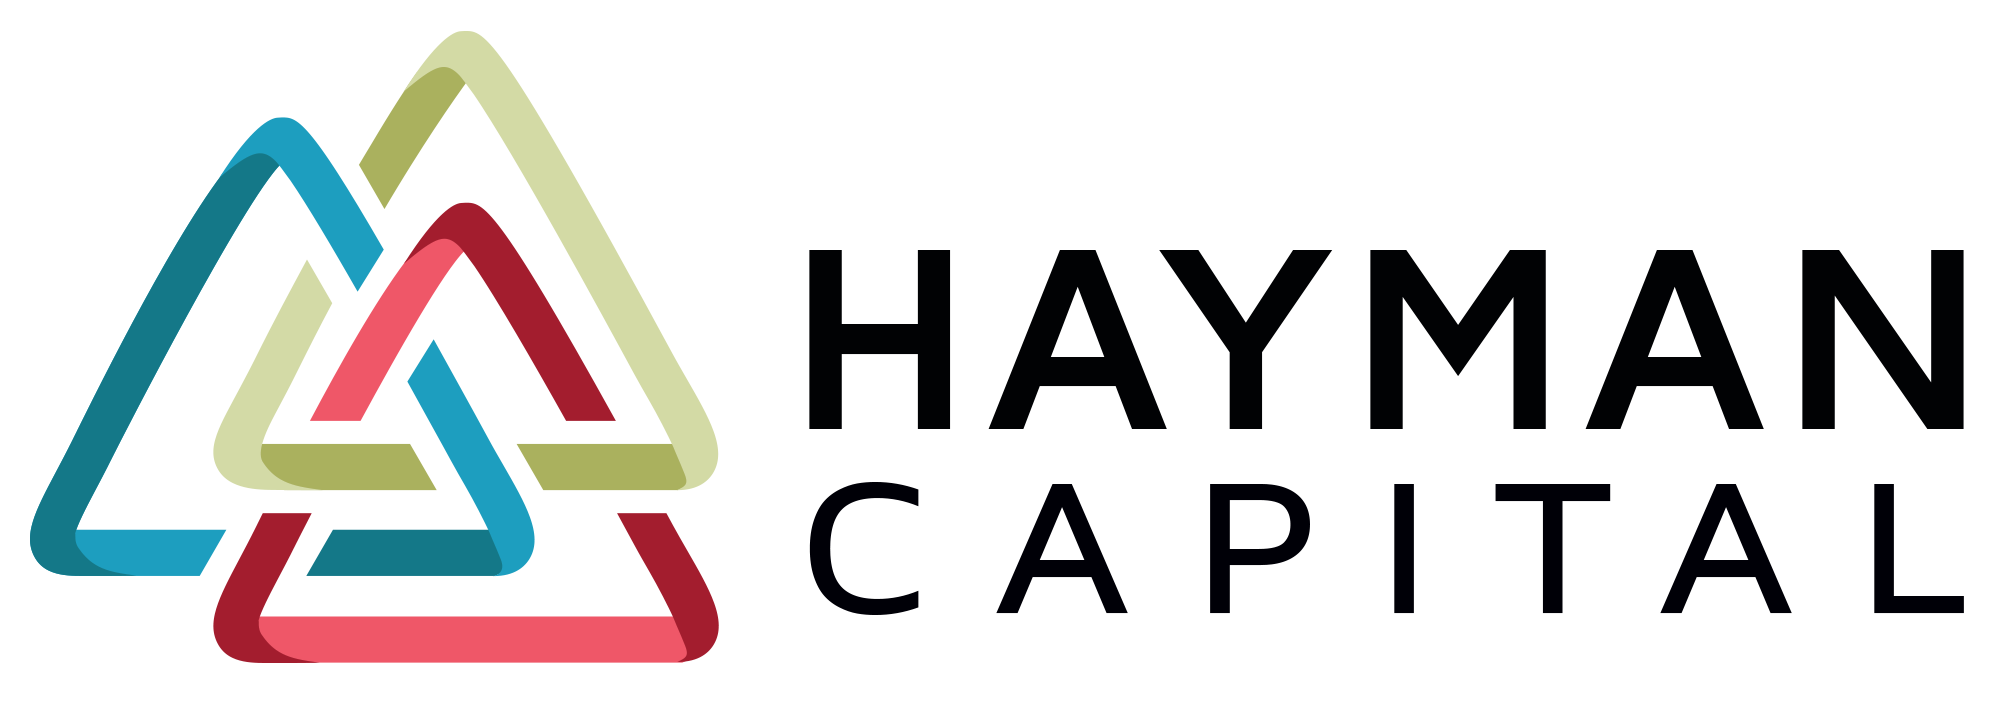 Hayman Capital - Home